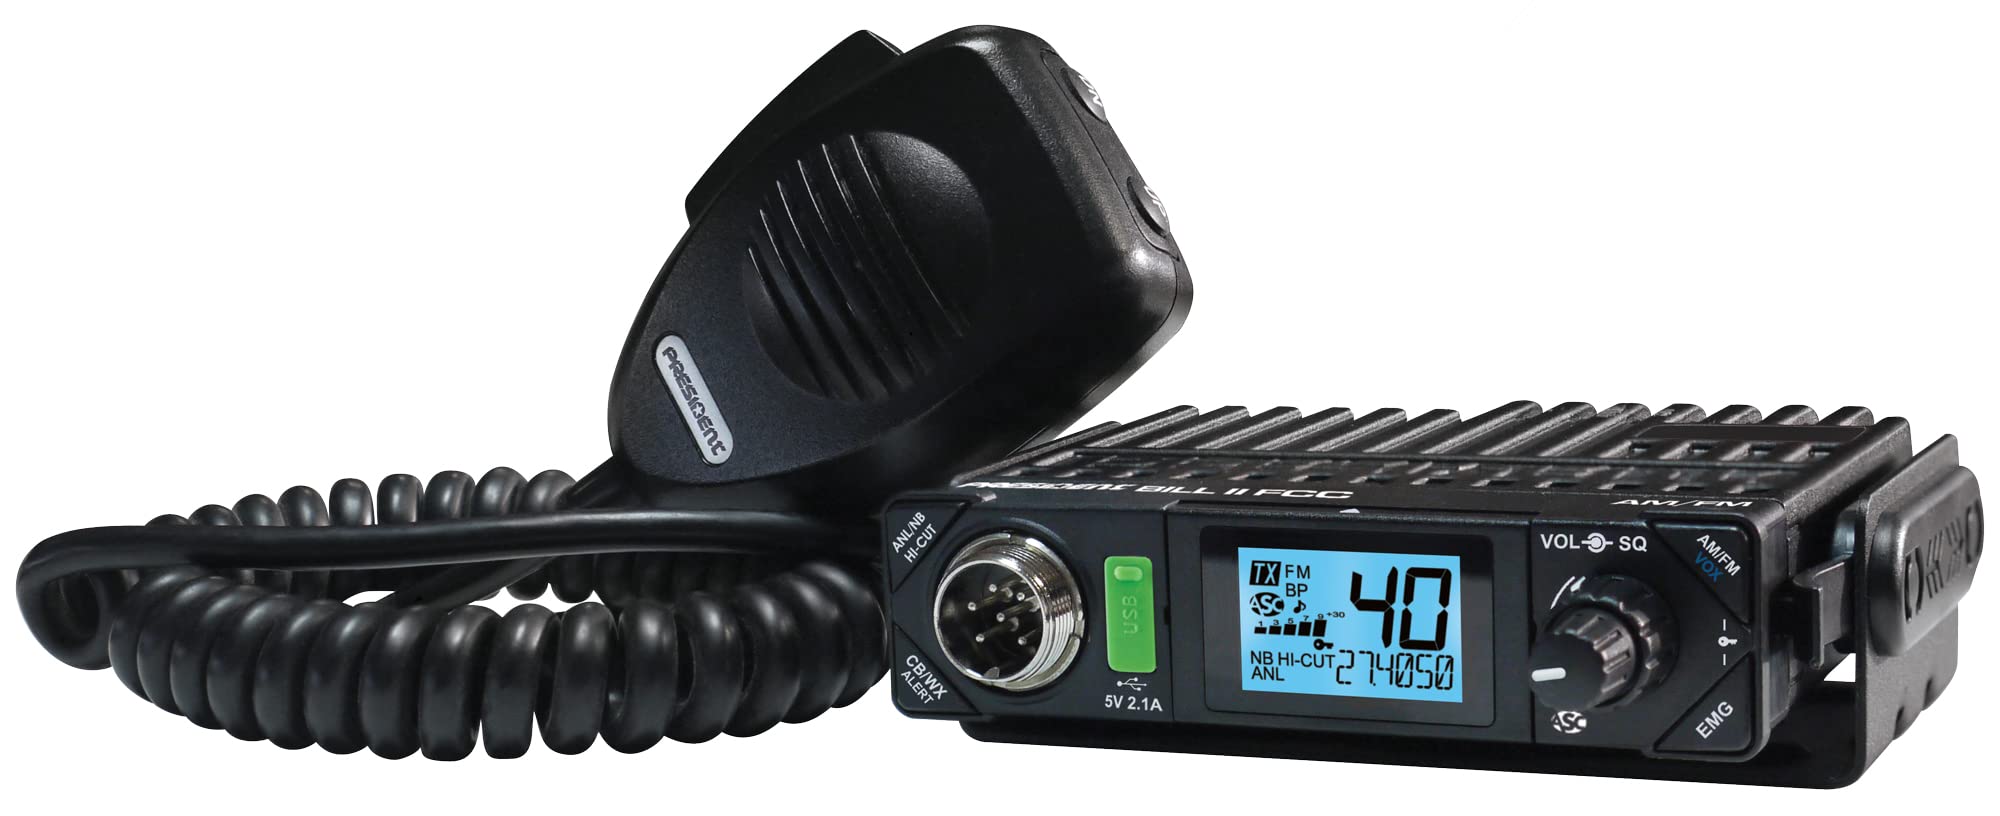 President Electronics Bill II FCC Ultra-Compact AM/FM CB Radio, Black, TXUS101